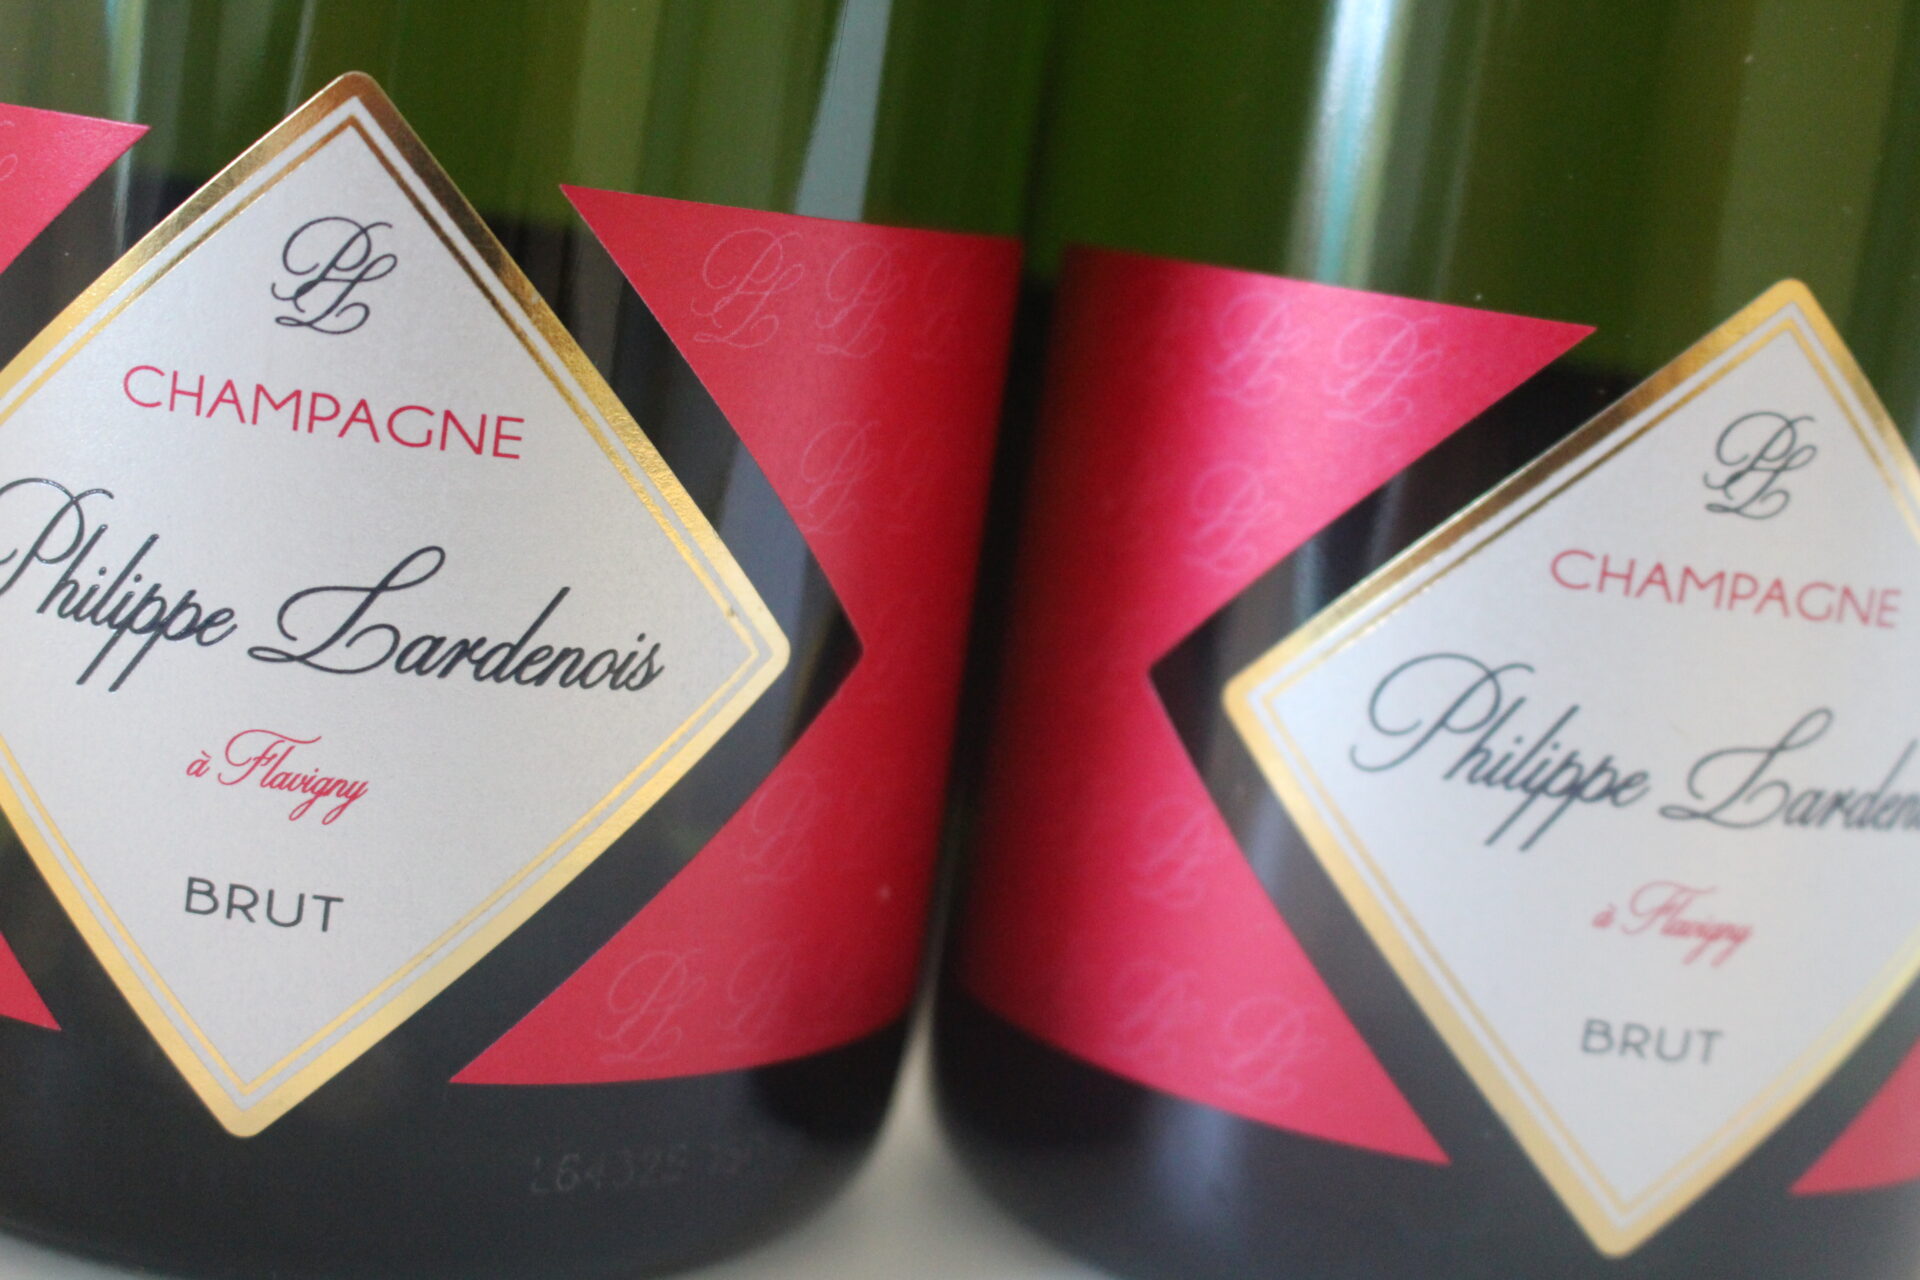 champagne en wijnen de blender Lardenois